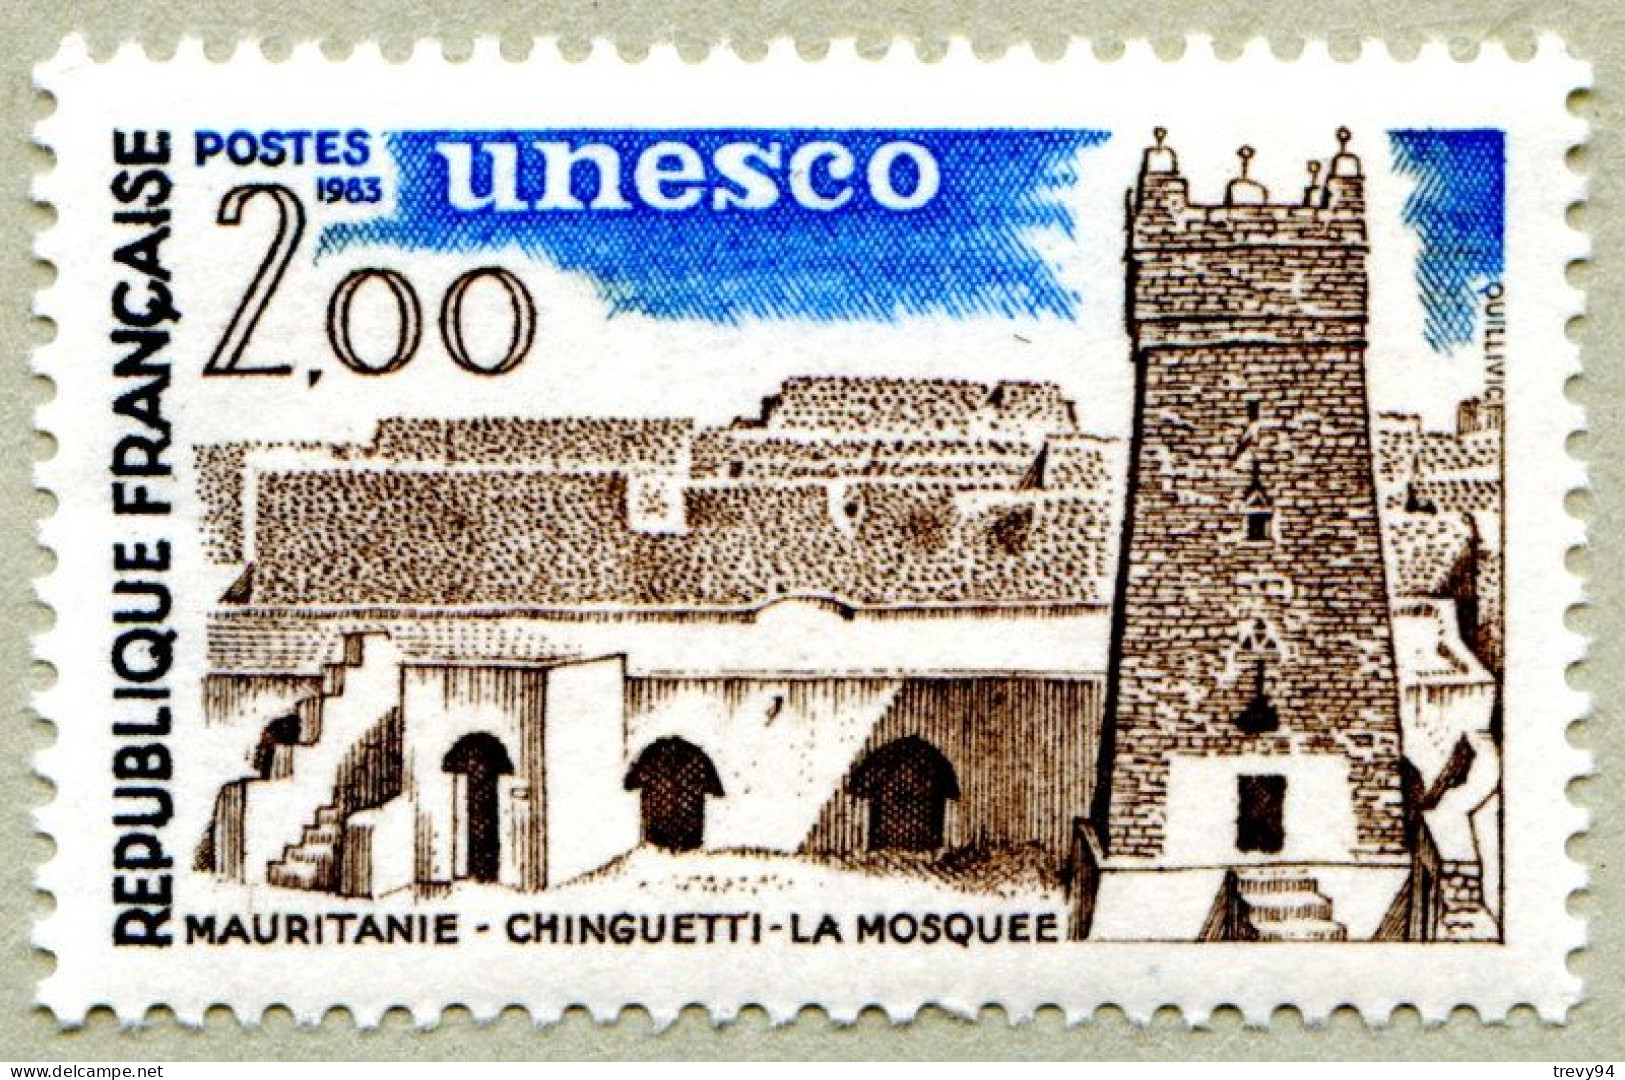 Timbre De Service 1983 - UNESCO Mauritanie Chinguetti - La Mosquée - N° 75 Neuf - Nuevos